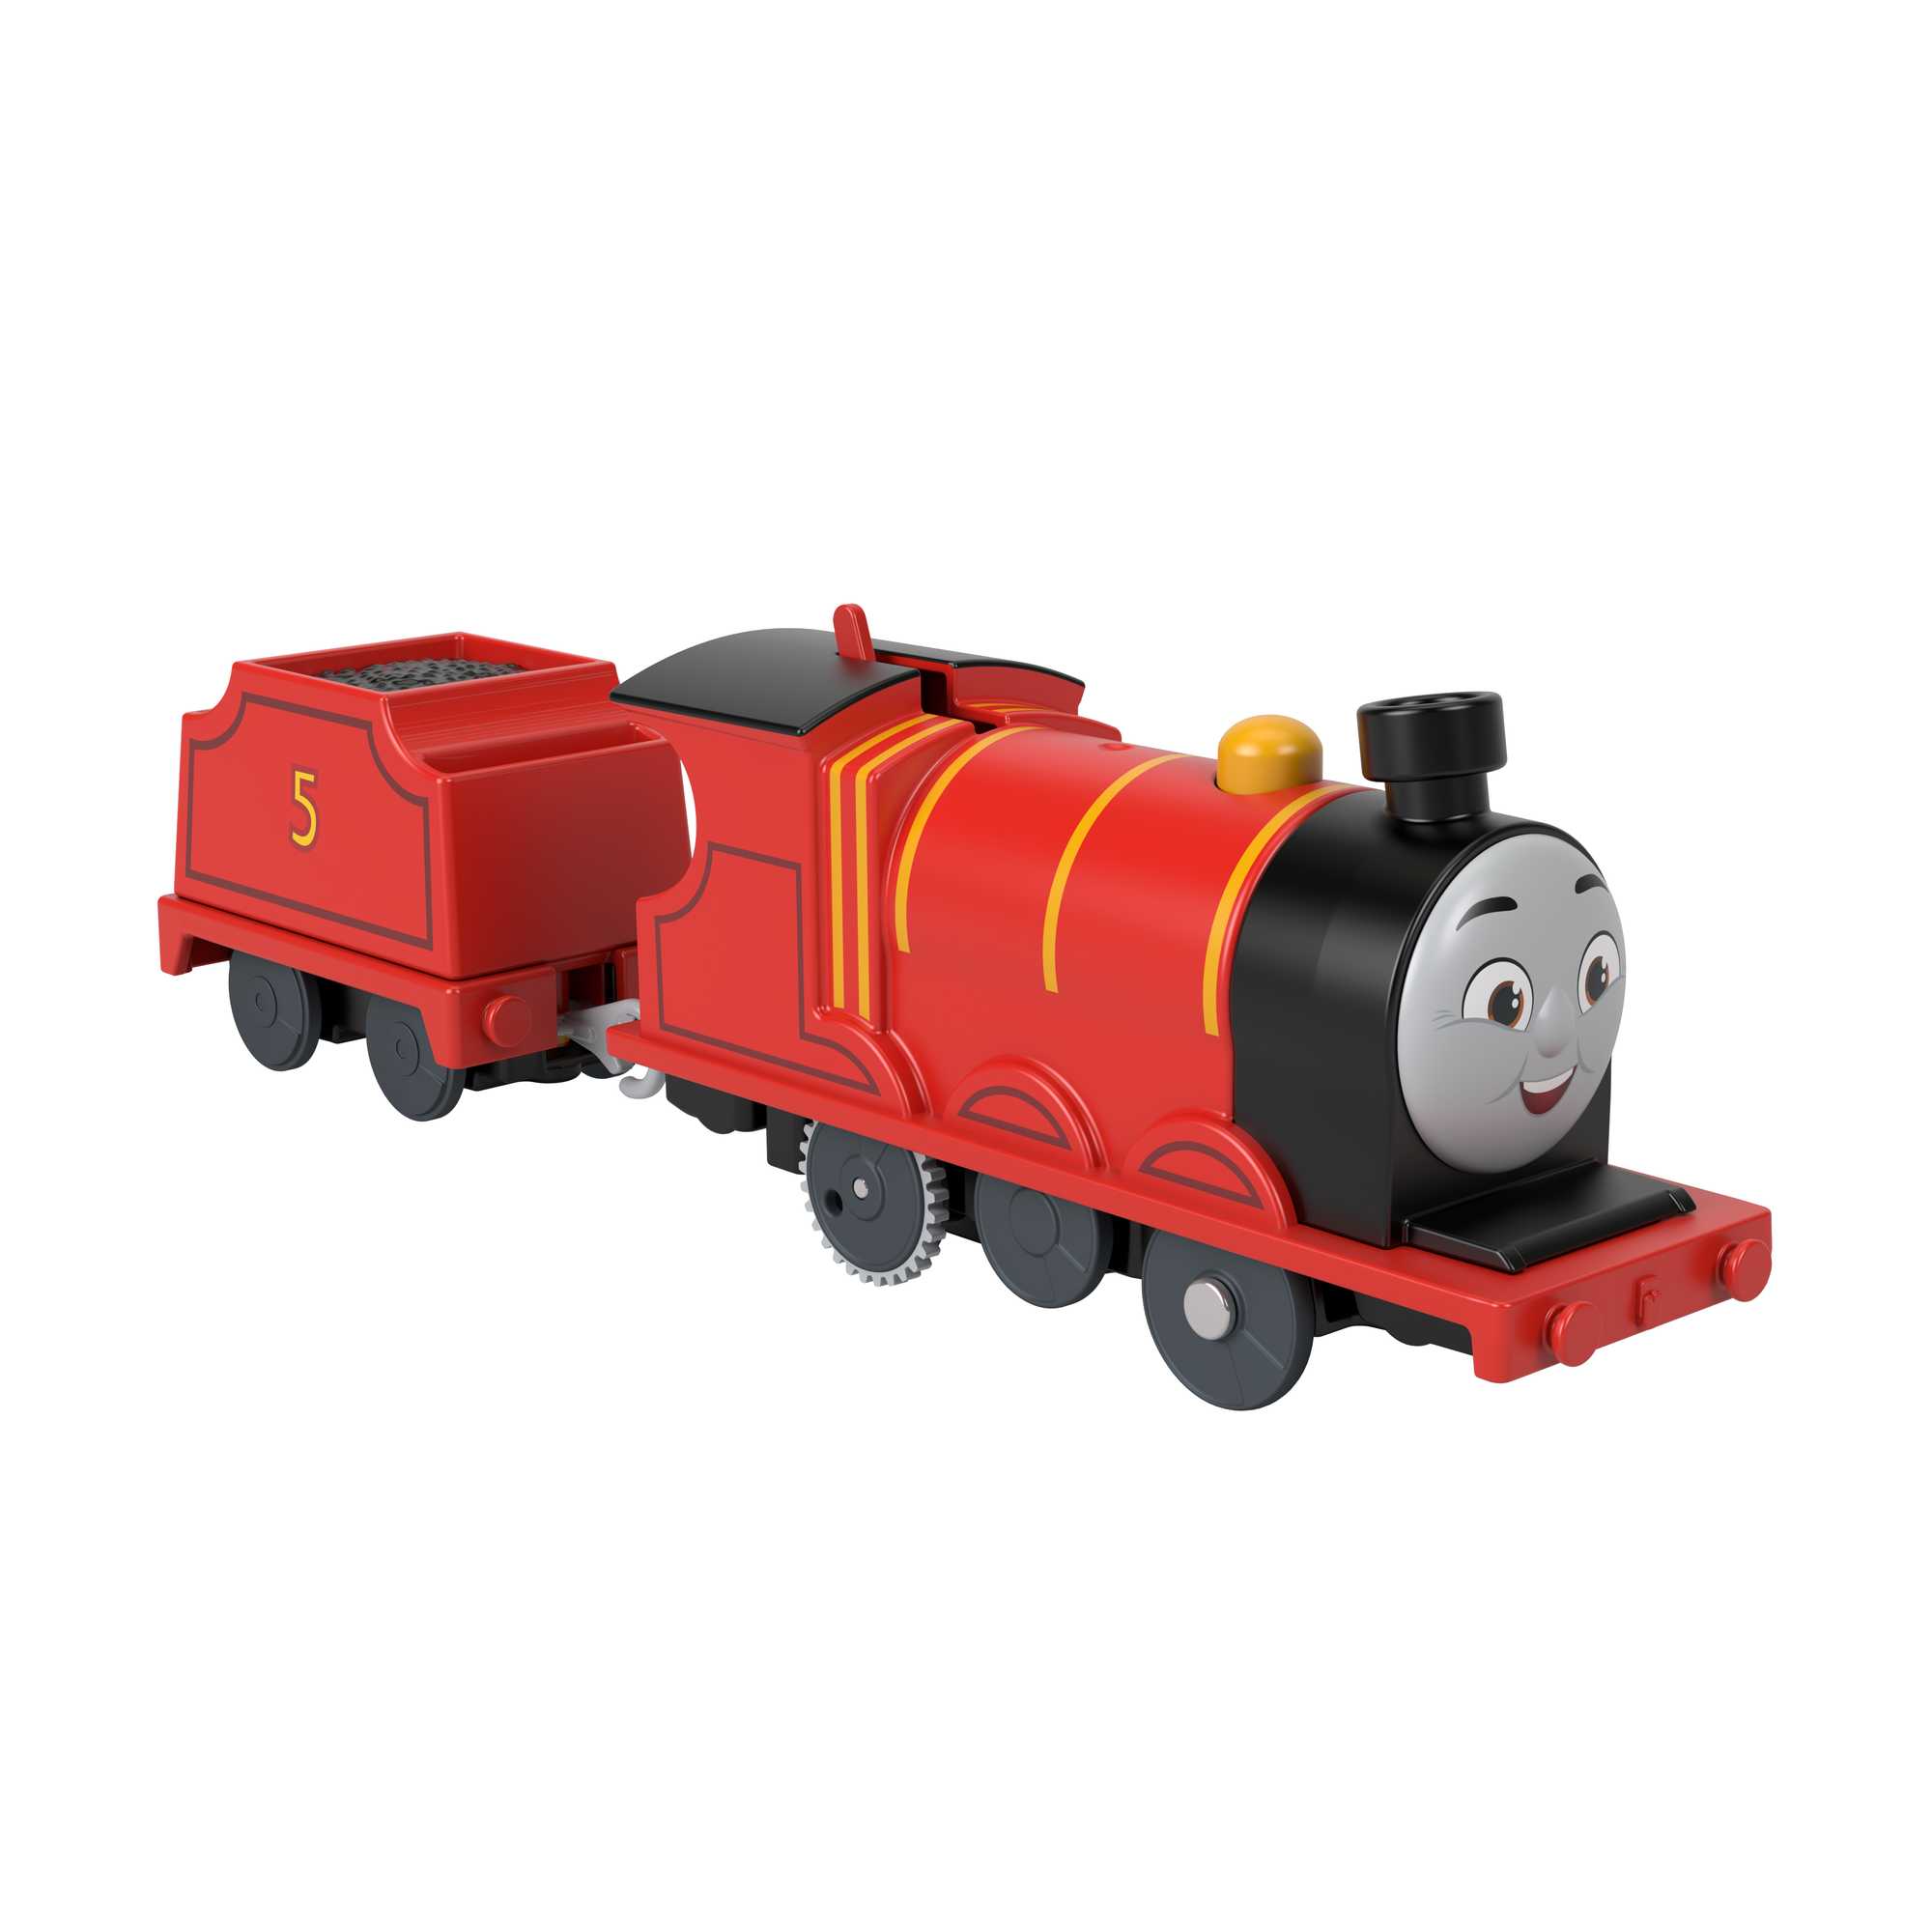 Thomas & Friends James Motorized Toy Train